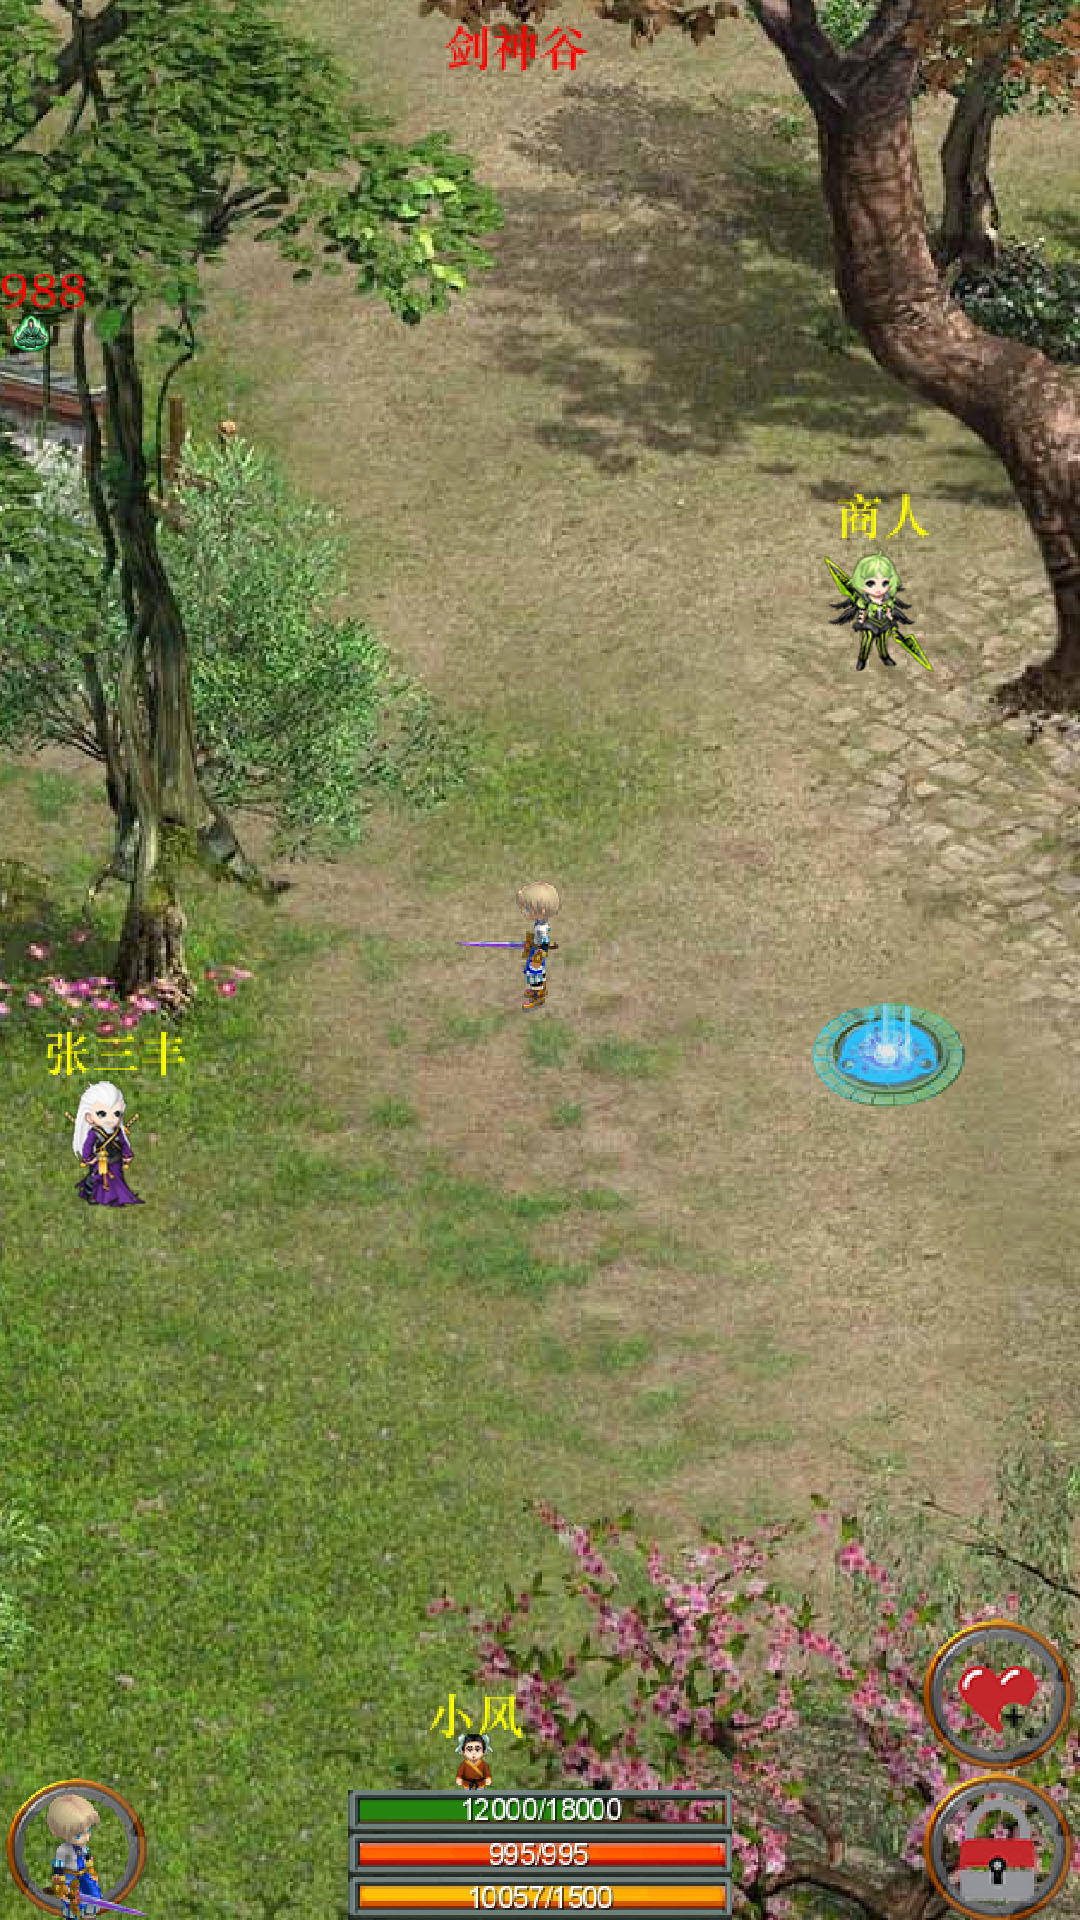 Screenshot 1 of Dio spada tascabile 